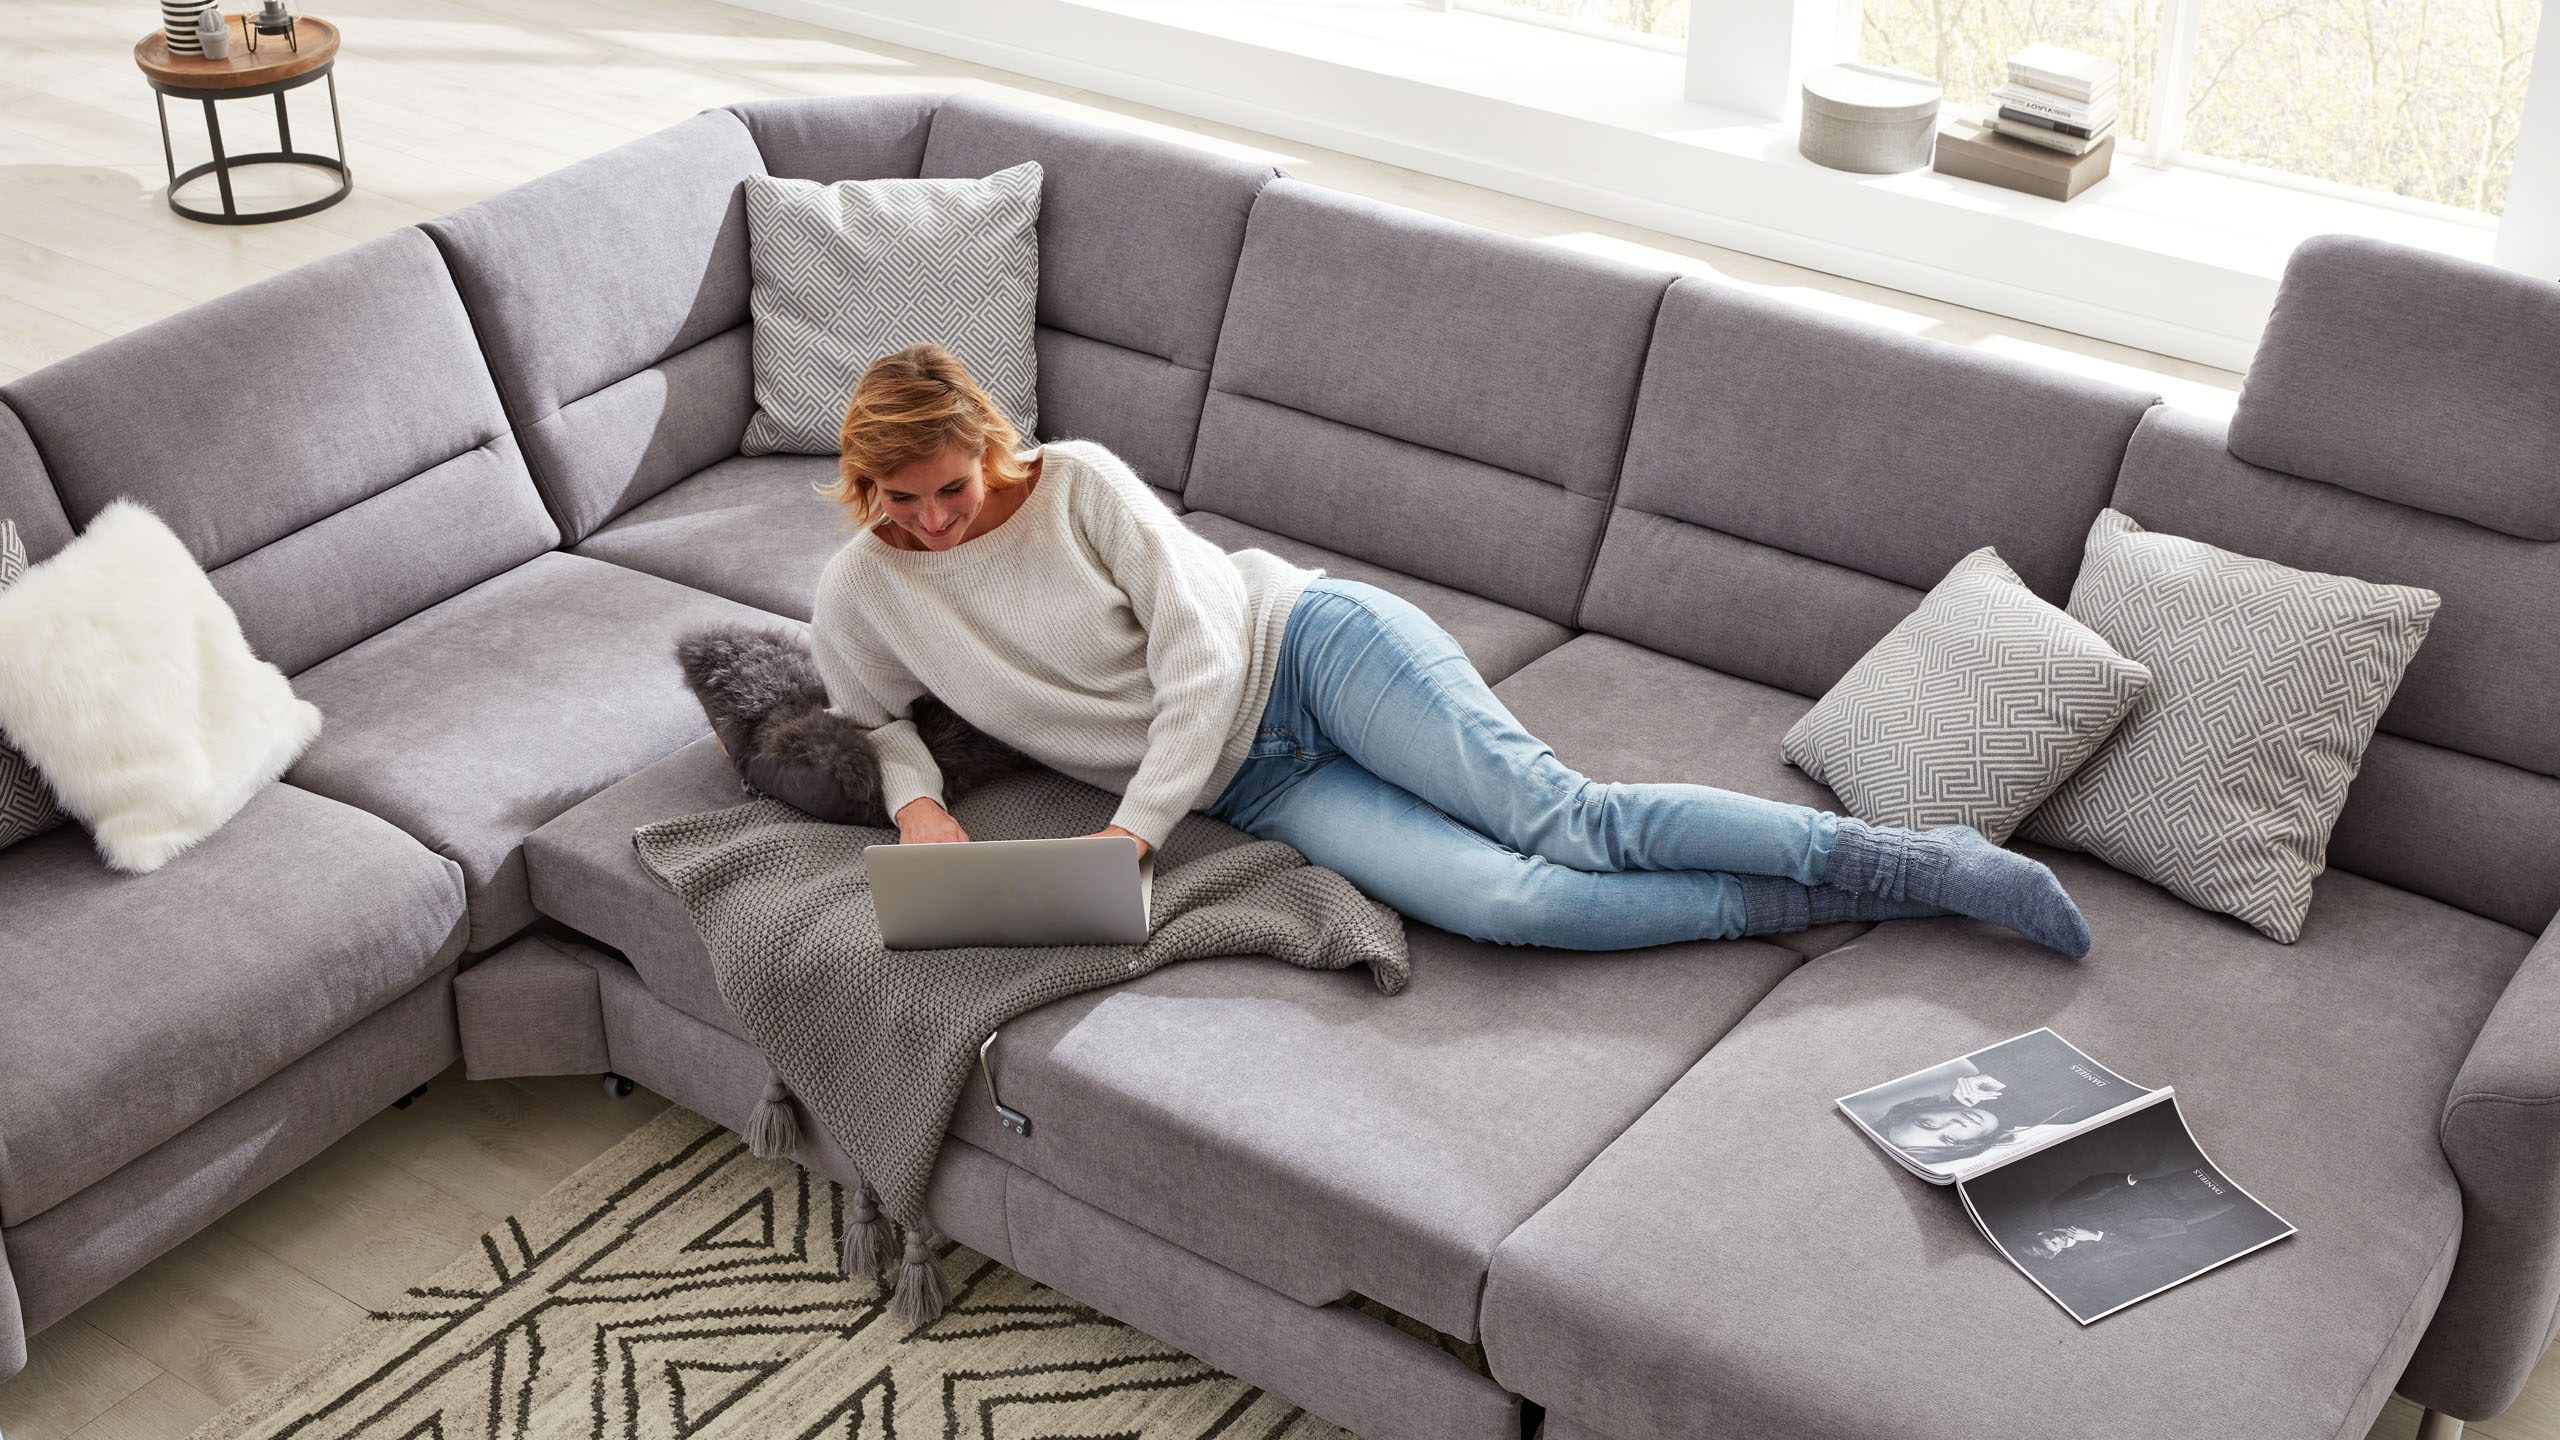 Frau liegt auf Interliving Sofa der Serie 4305 in grau